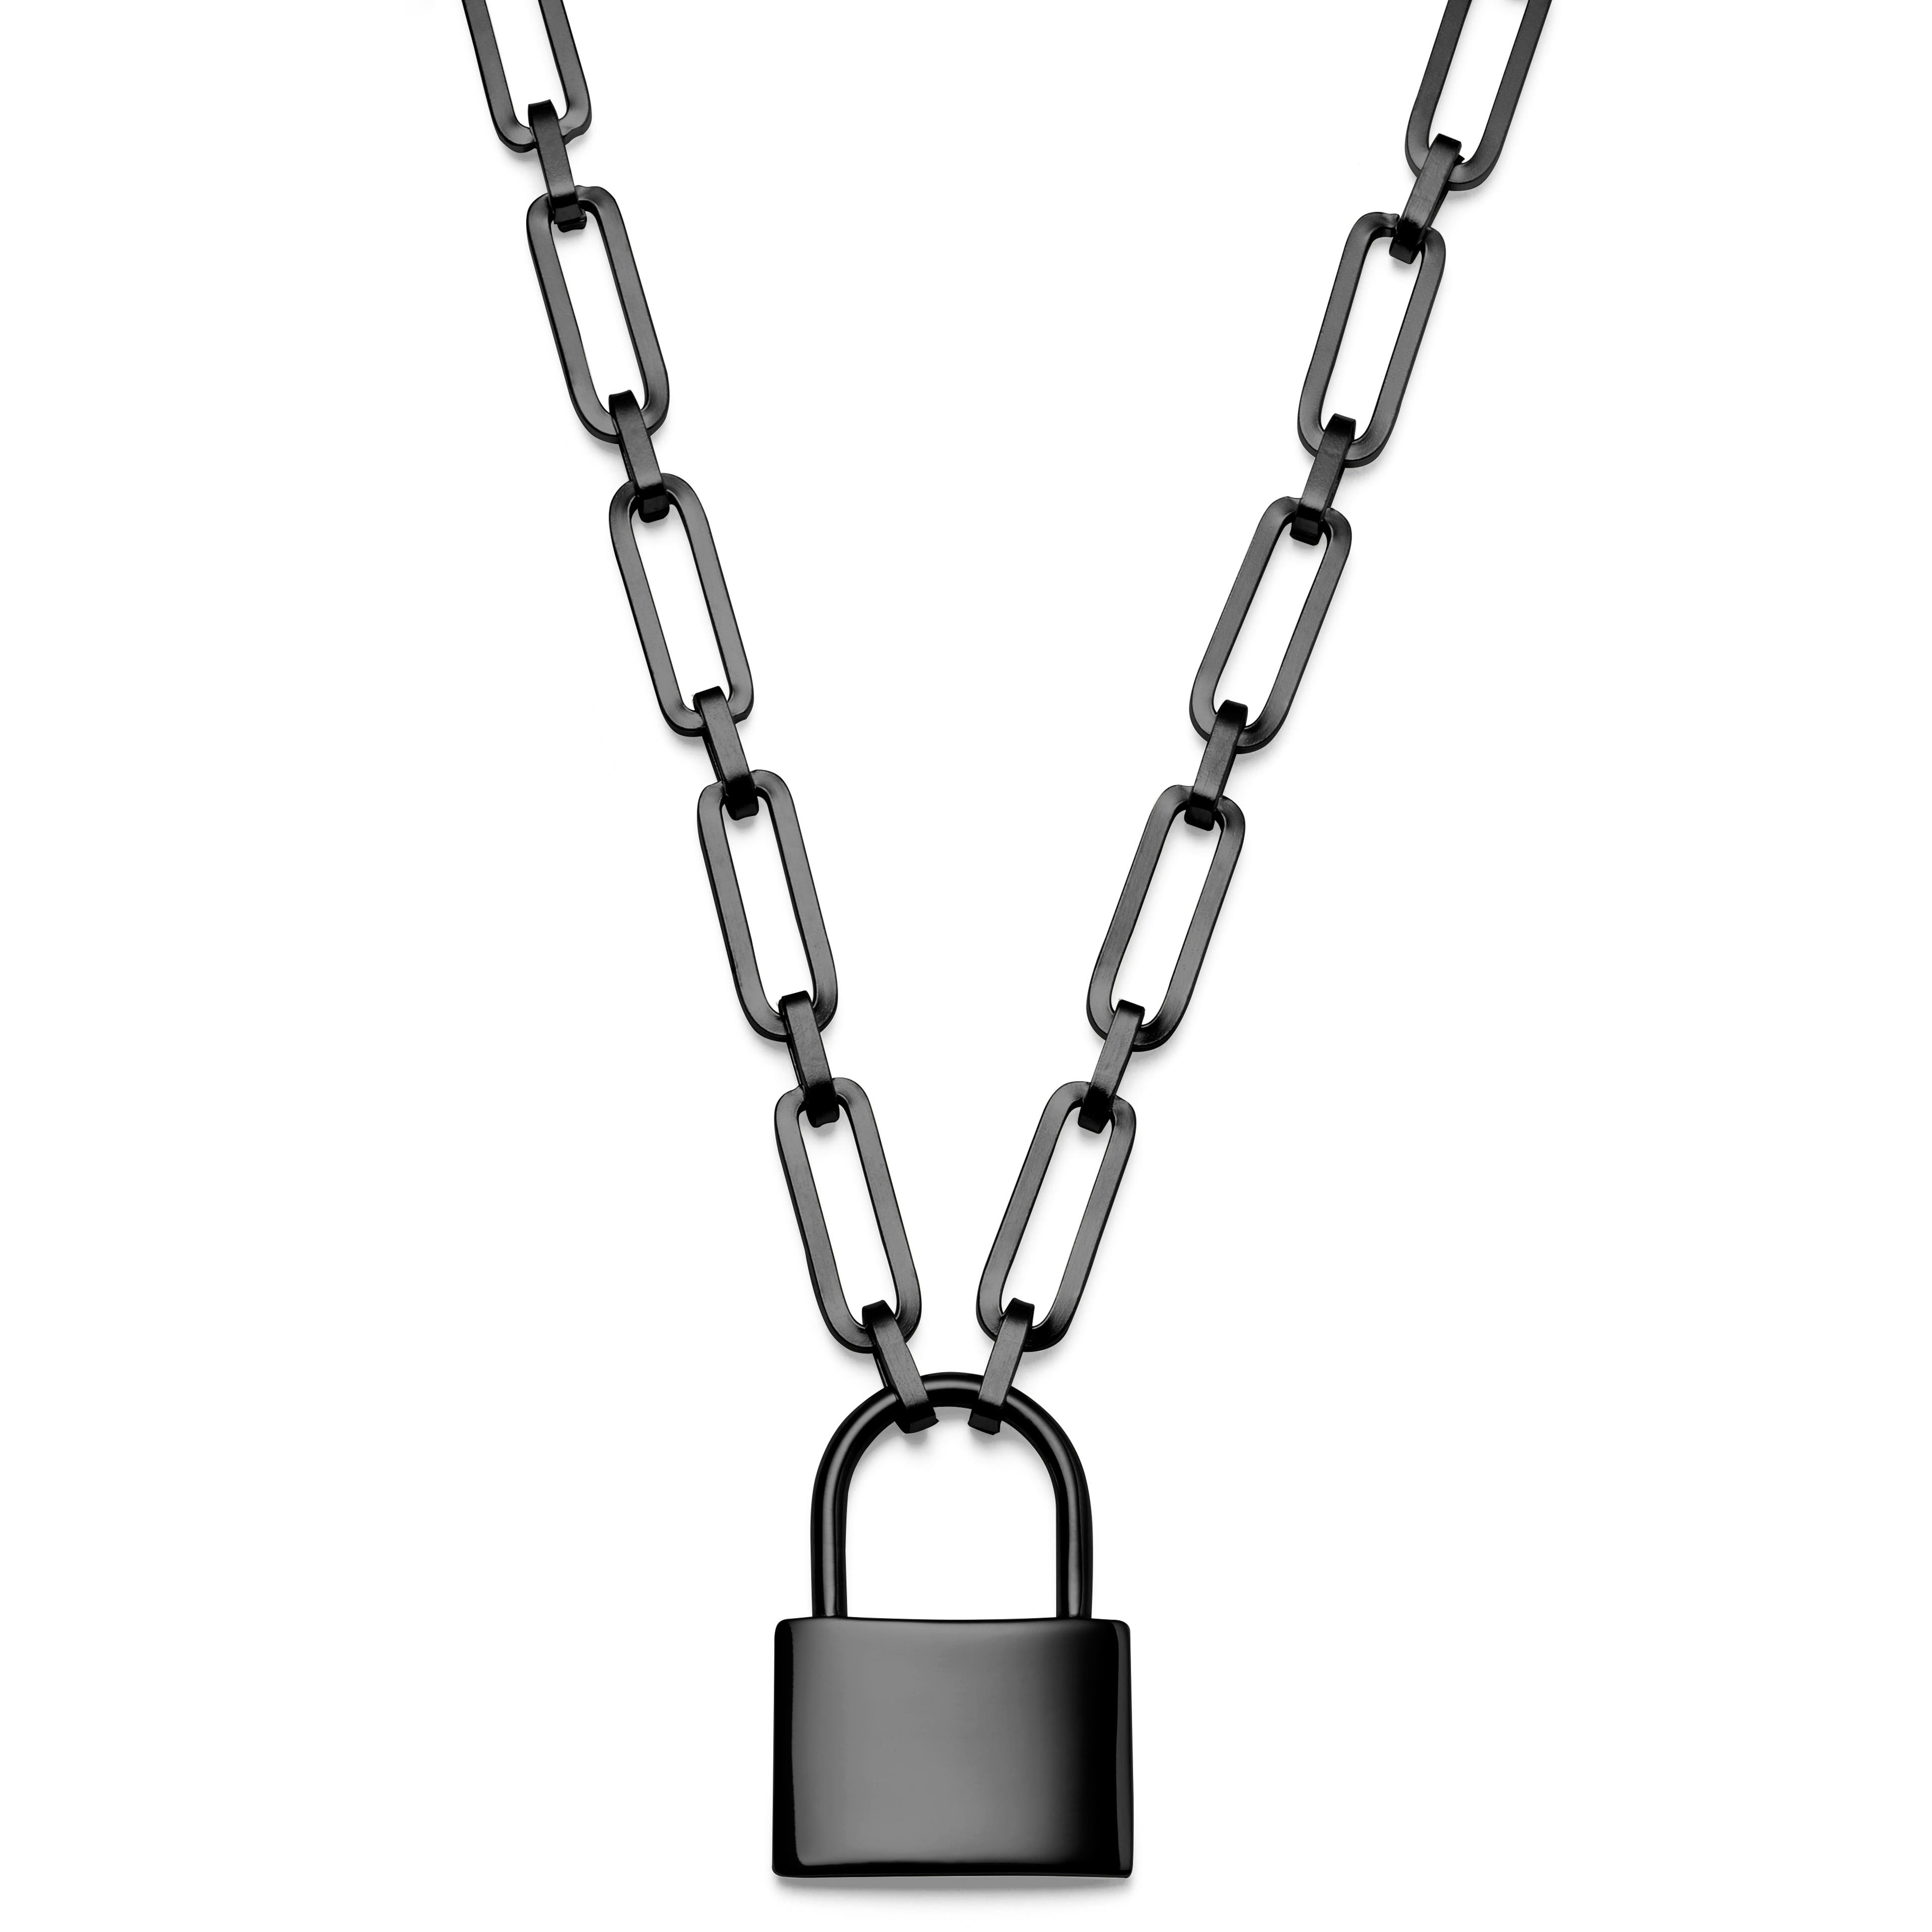 Titanium Chain Necklace with Locking Clasp